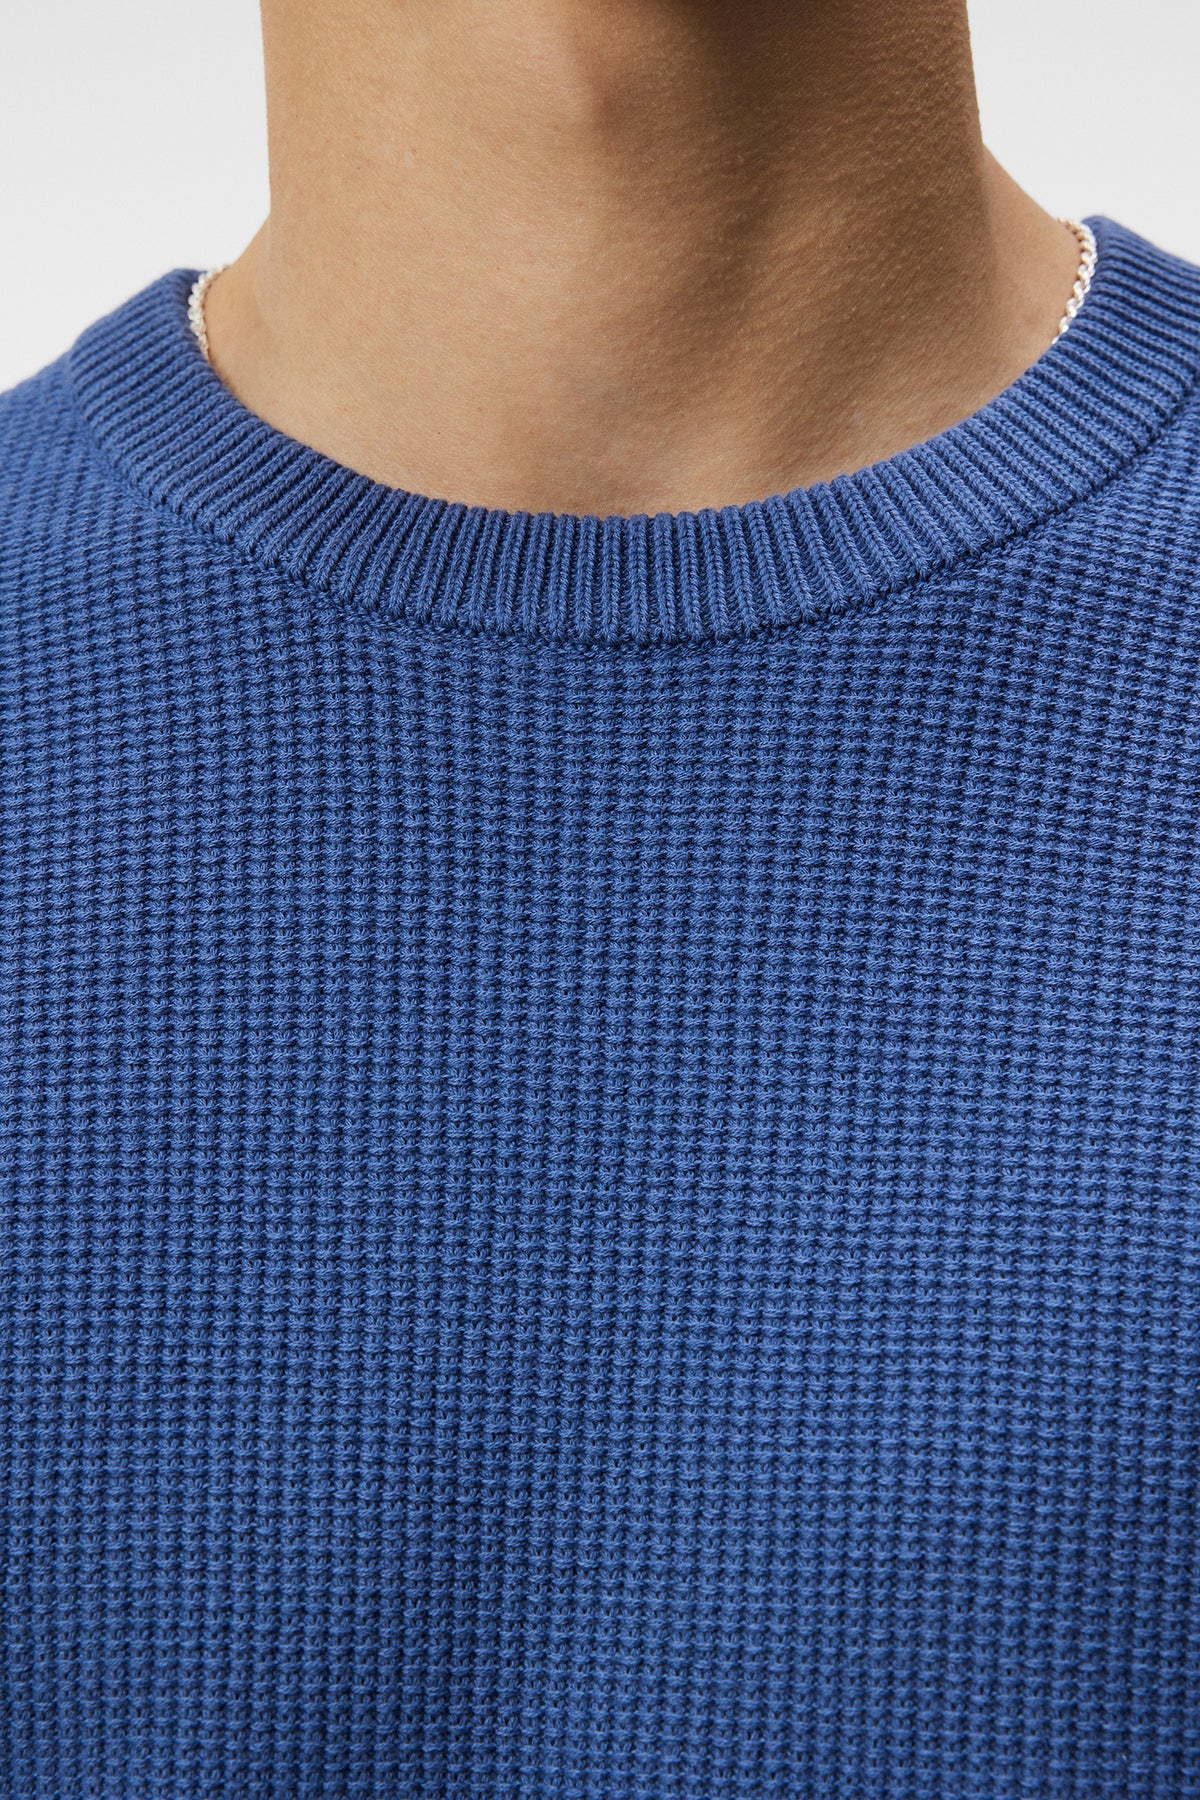 Arthur Knit Org Cotton / Bijou Blue